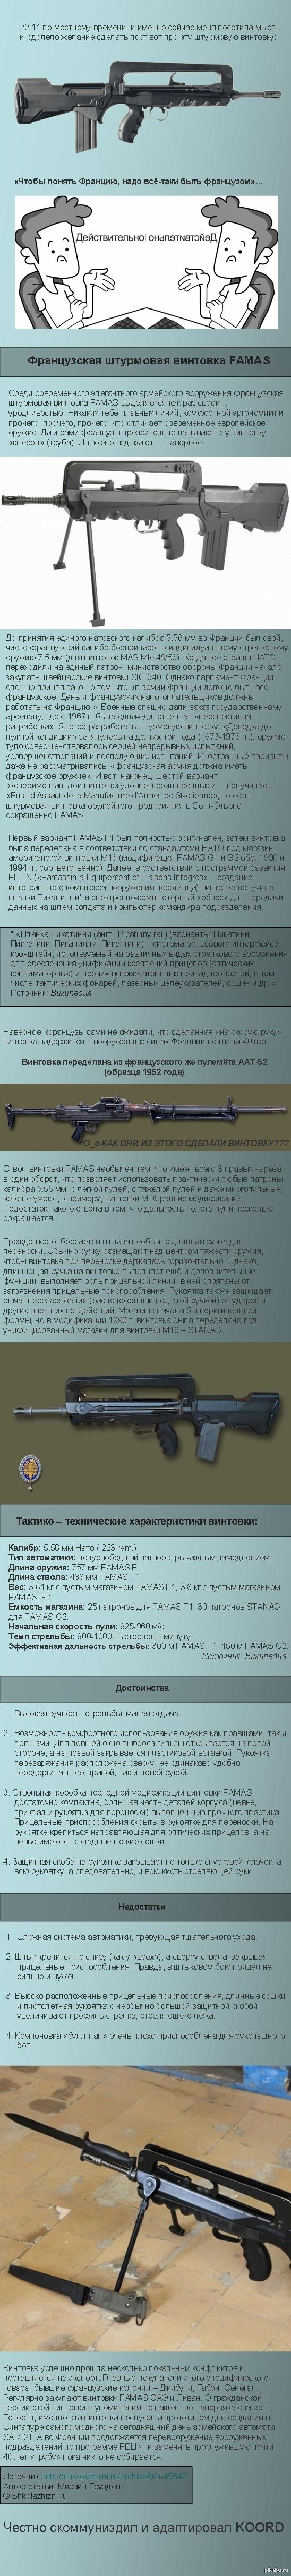 FAMAS assault rifle - Rifle, Assault rifle, France, Famas, Weapon, , Firearms, Longpost